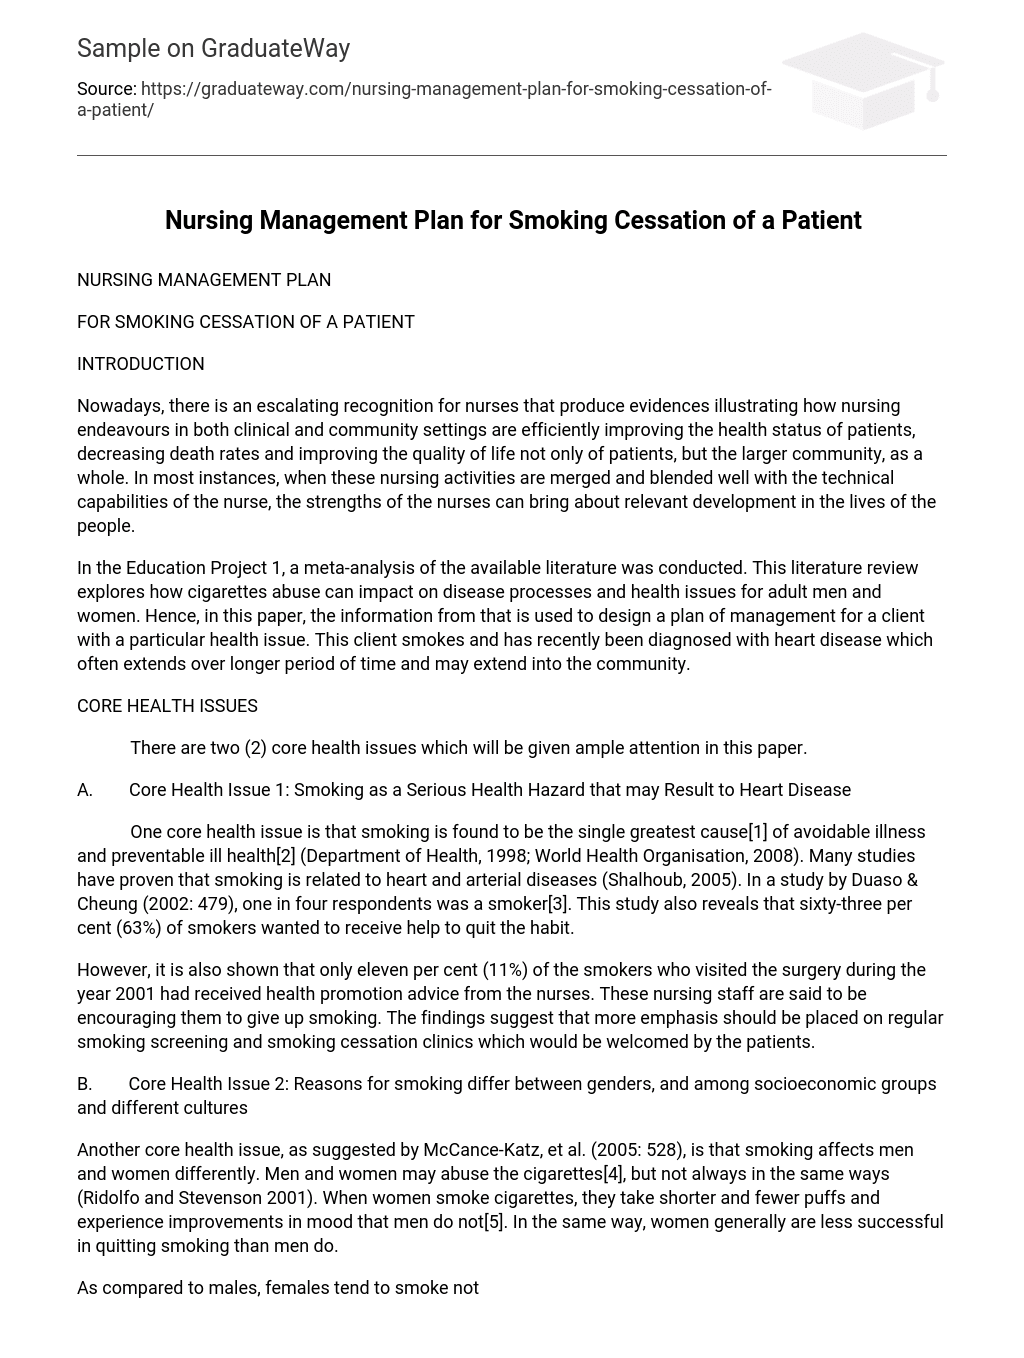 Nursing Management Plan for Smoking Cessation of a Patient